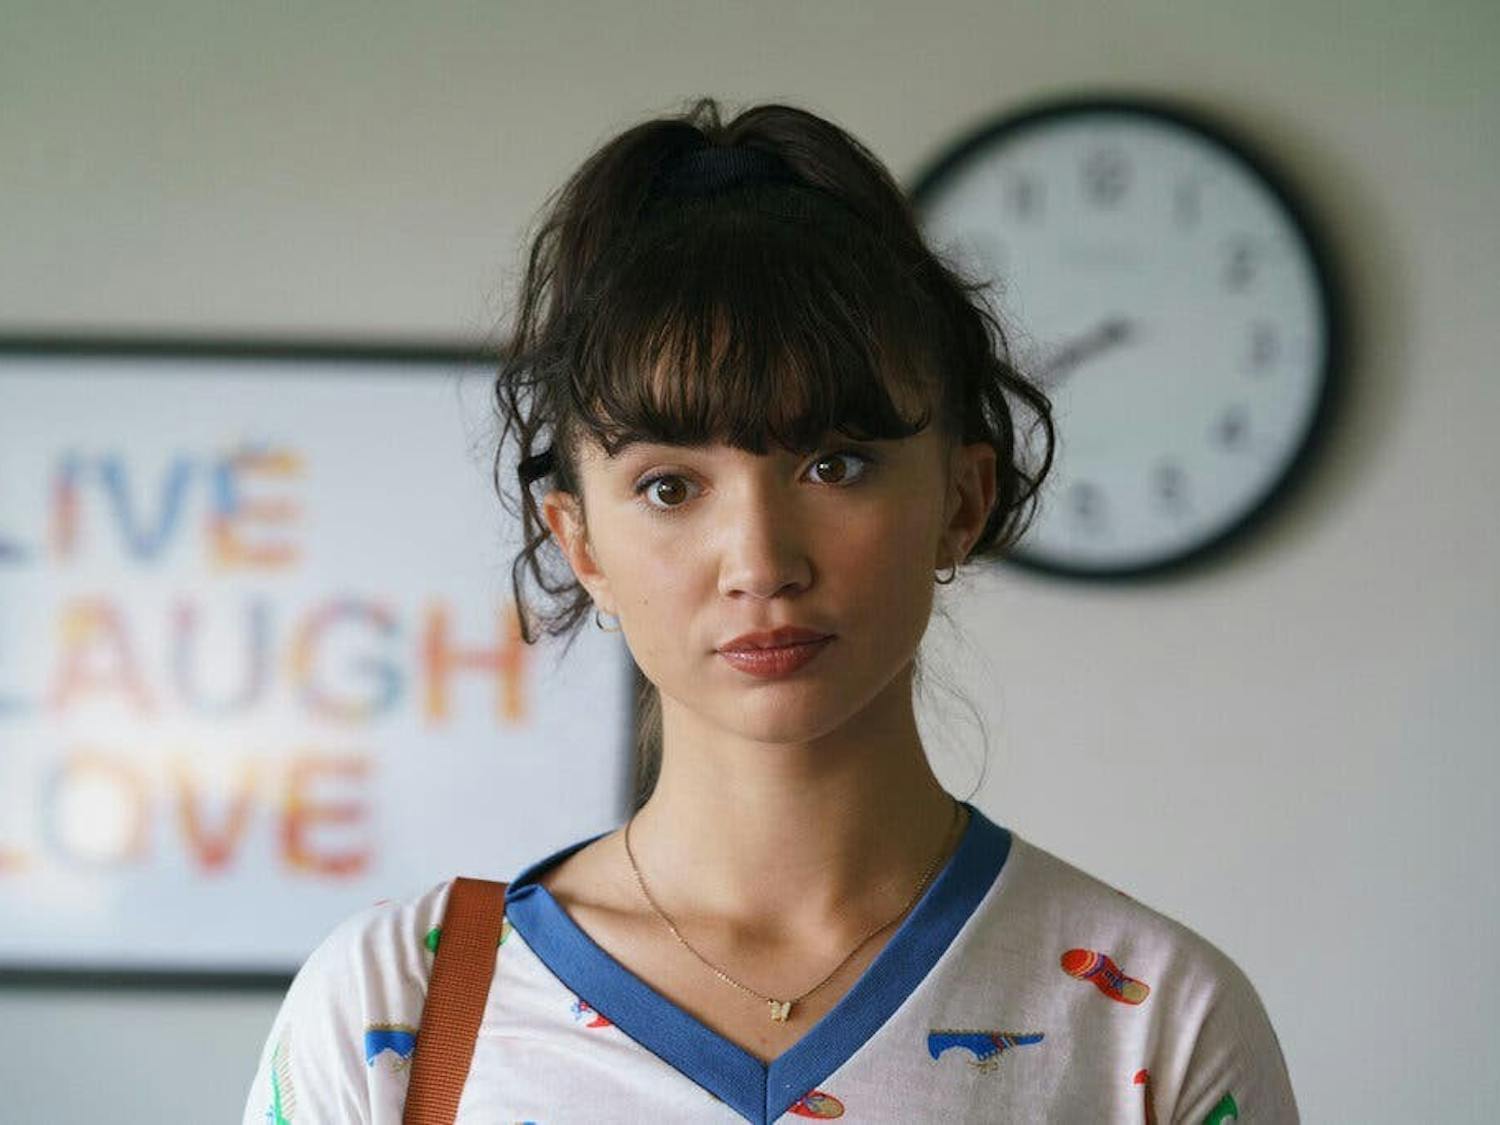 Rowan Blanchard plays Paige Evans in the 2022 coming-of-age Hulu film, “Crush.”